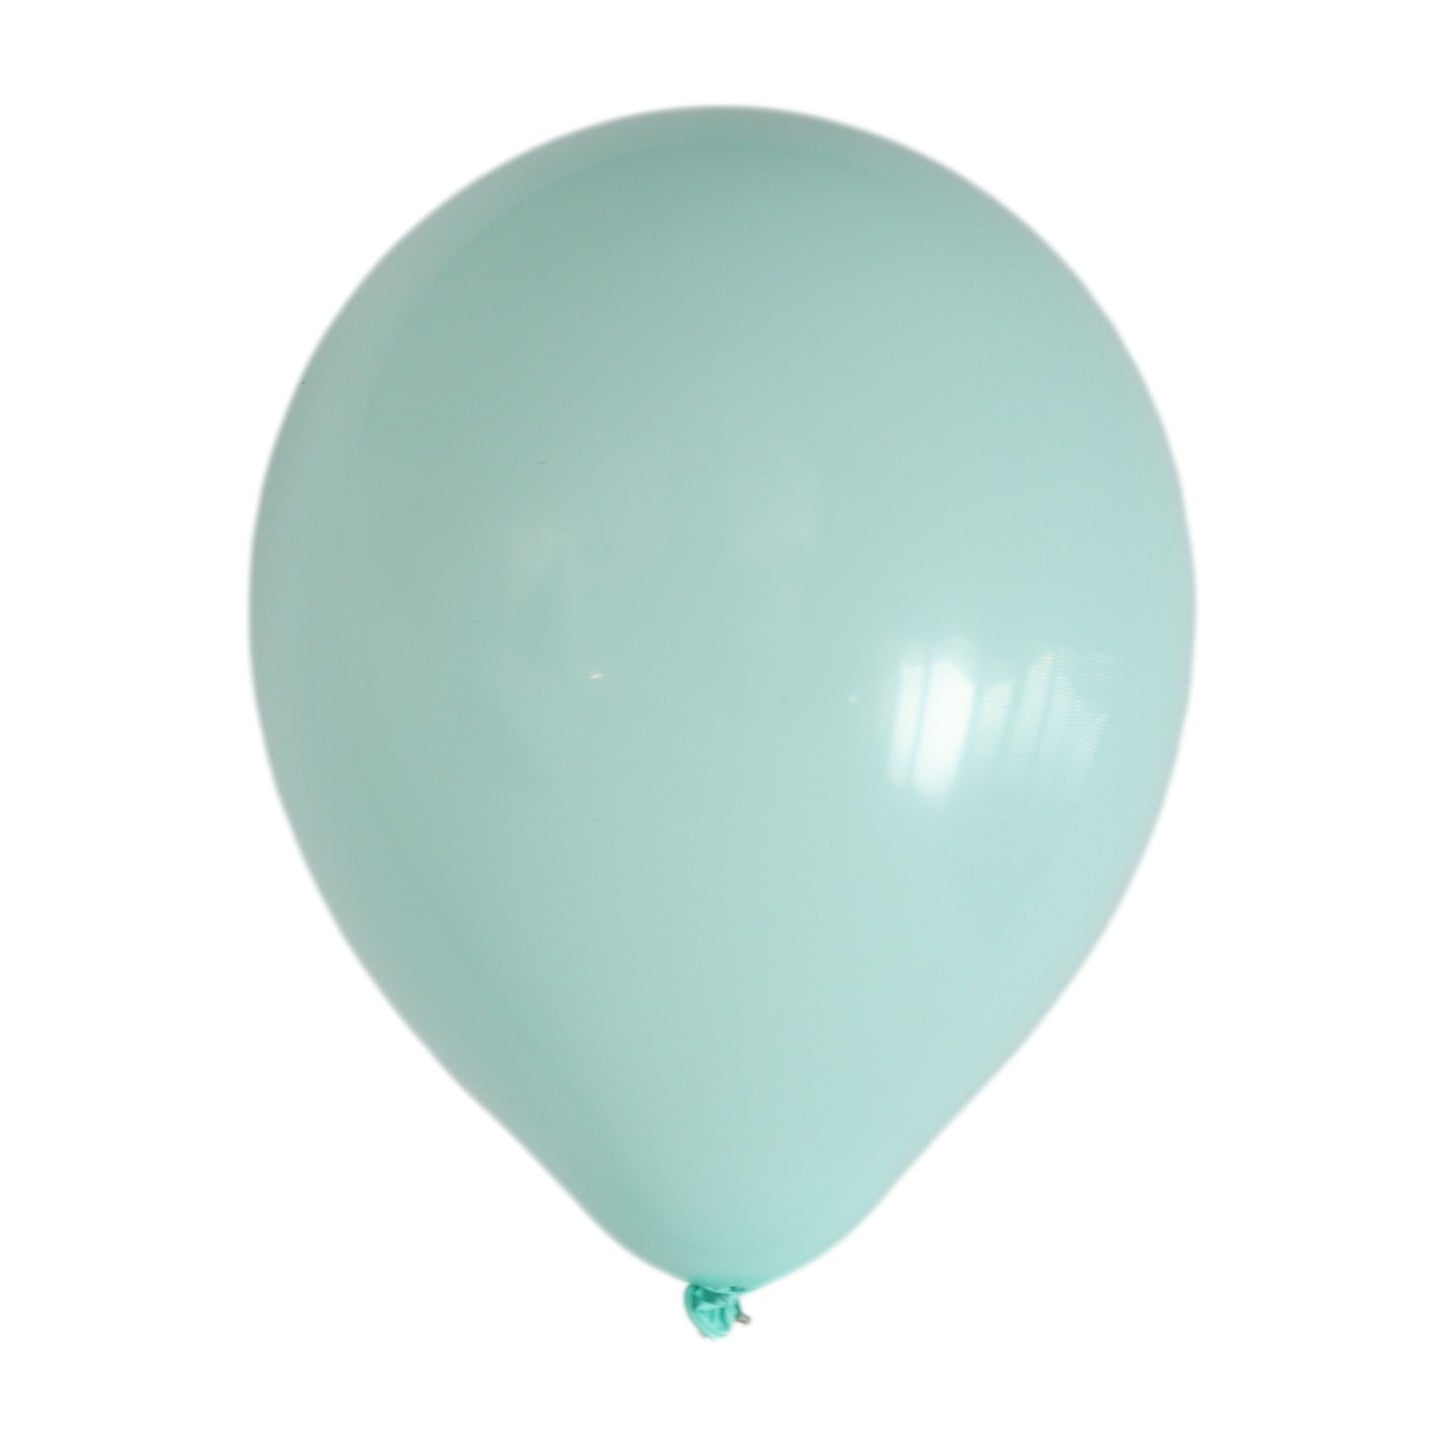 Pastel Tiffany Blauwe Ballonnen (10 stuks / 30 CM)